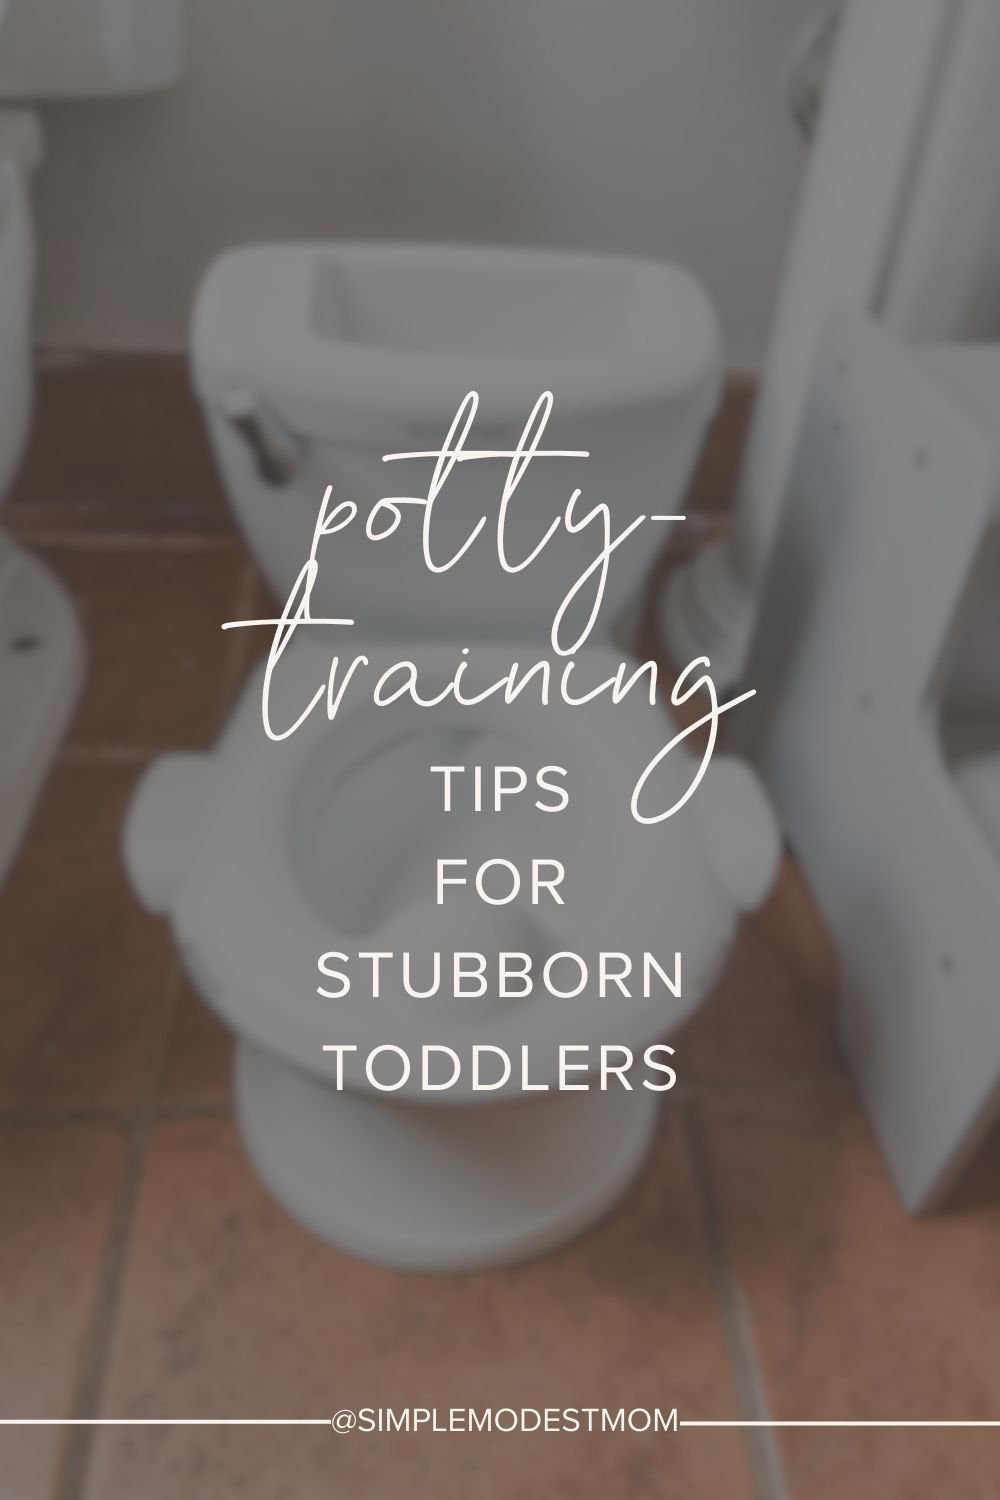 Potty Training Tips for Stubborn Toddlers.jpg